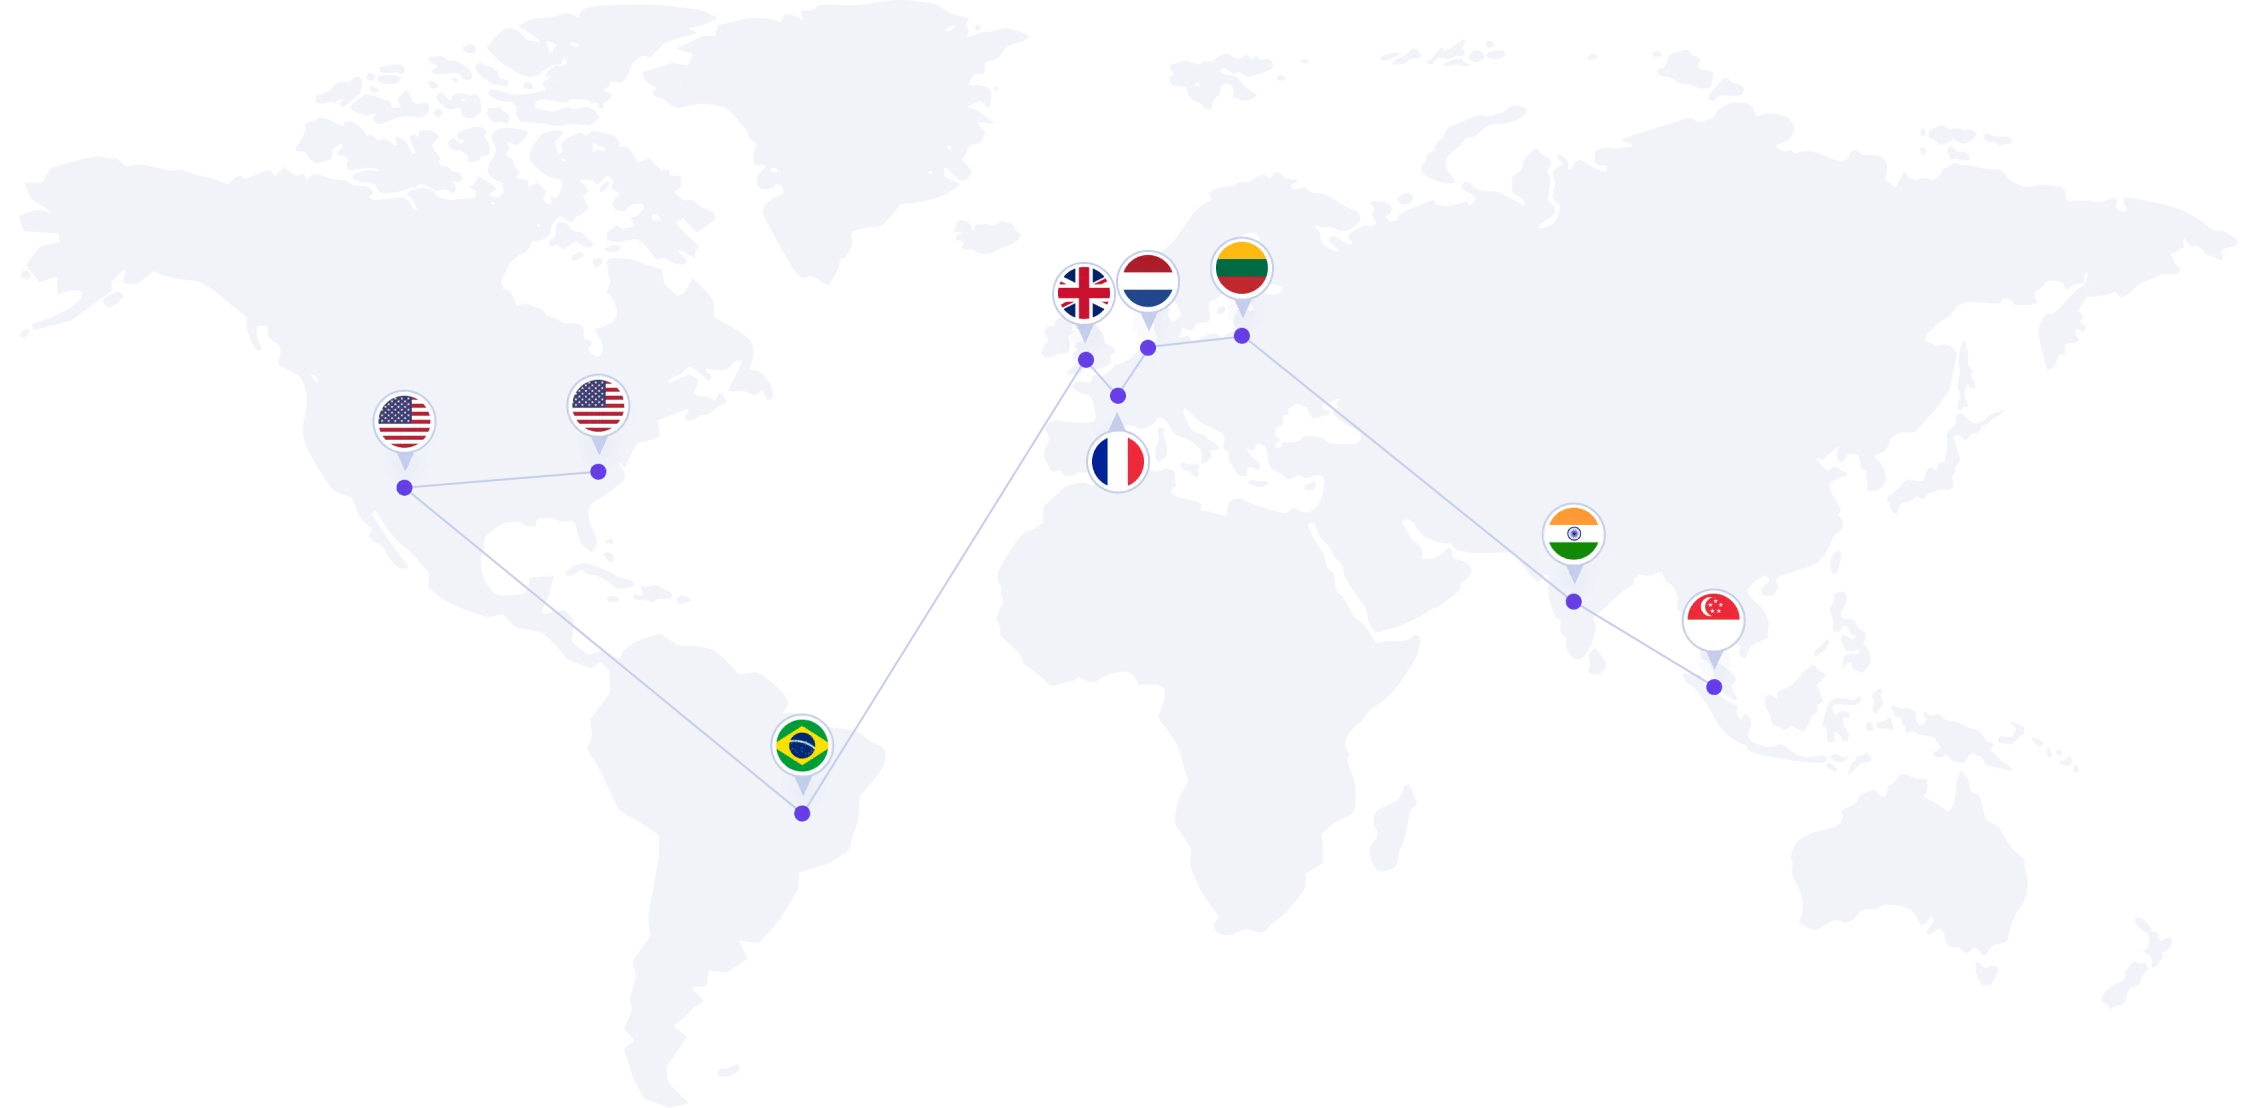 Data Centers All Around the World